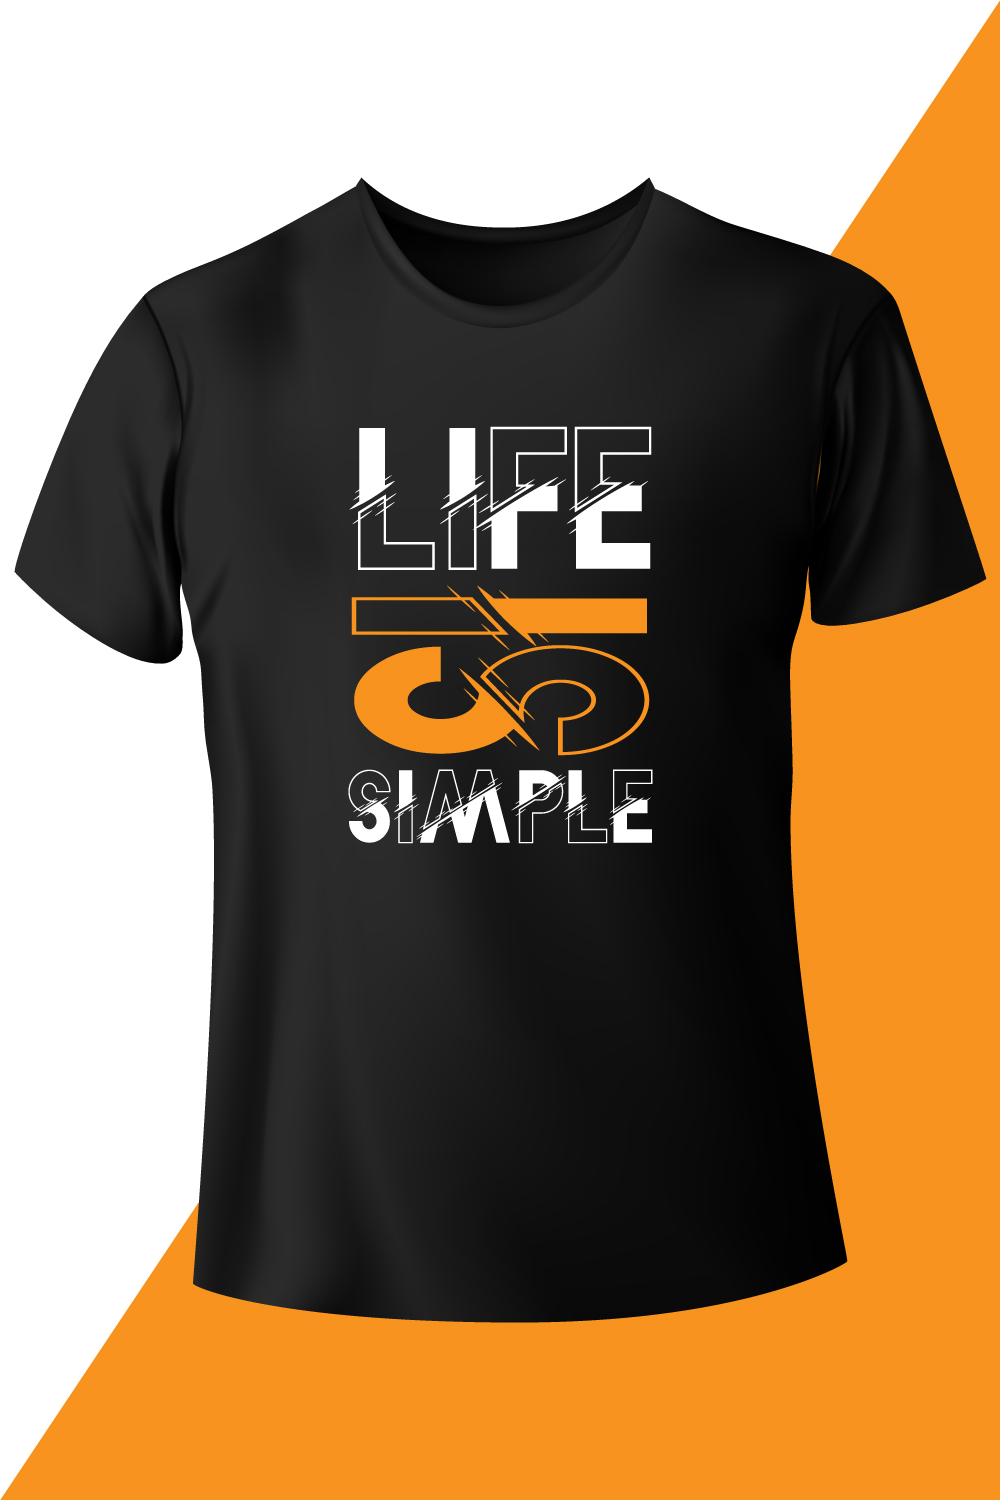 Image of a black t-shirt with a unique inscription Life Is Simple.